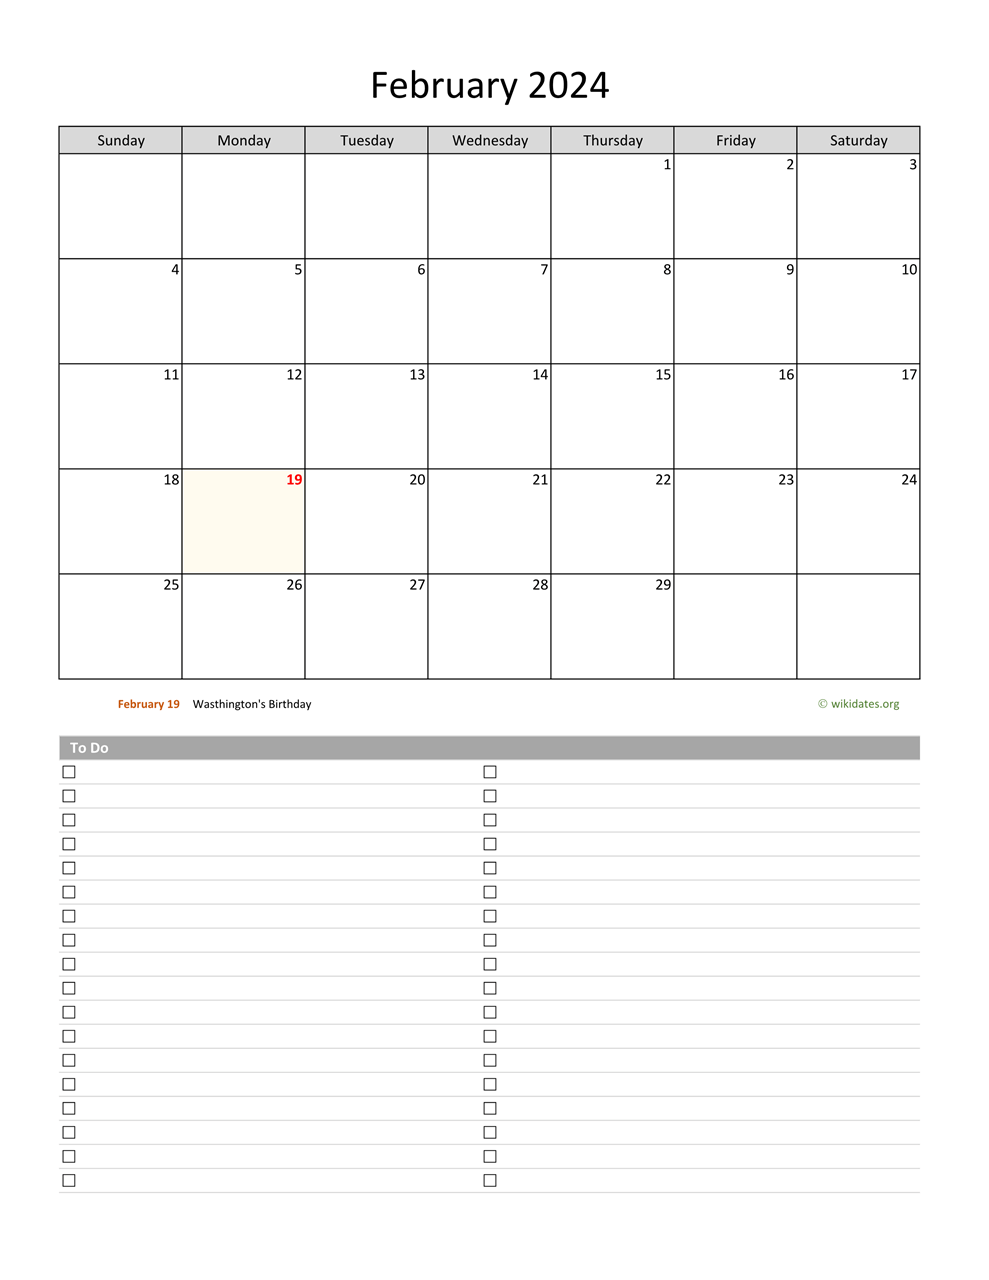 february-2024-calendar-with-to-do-list-wikidates